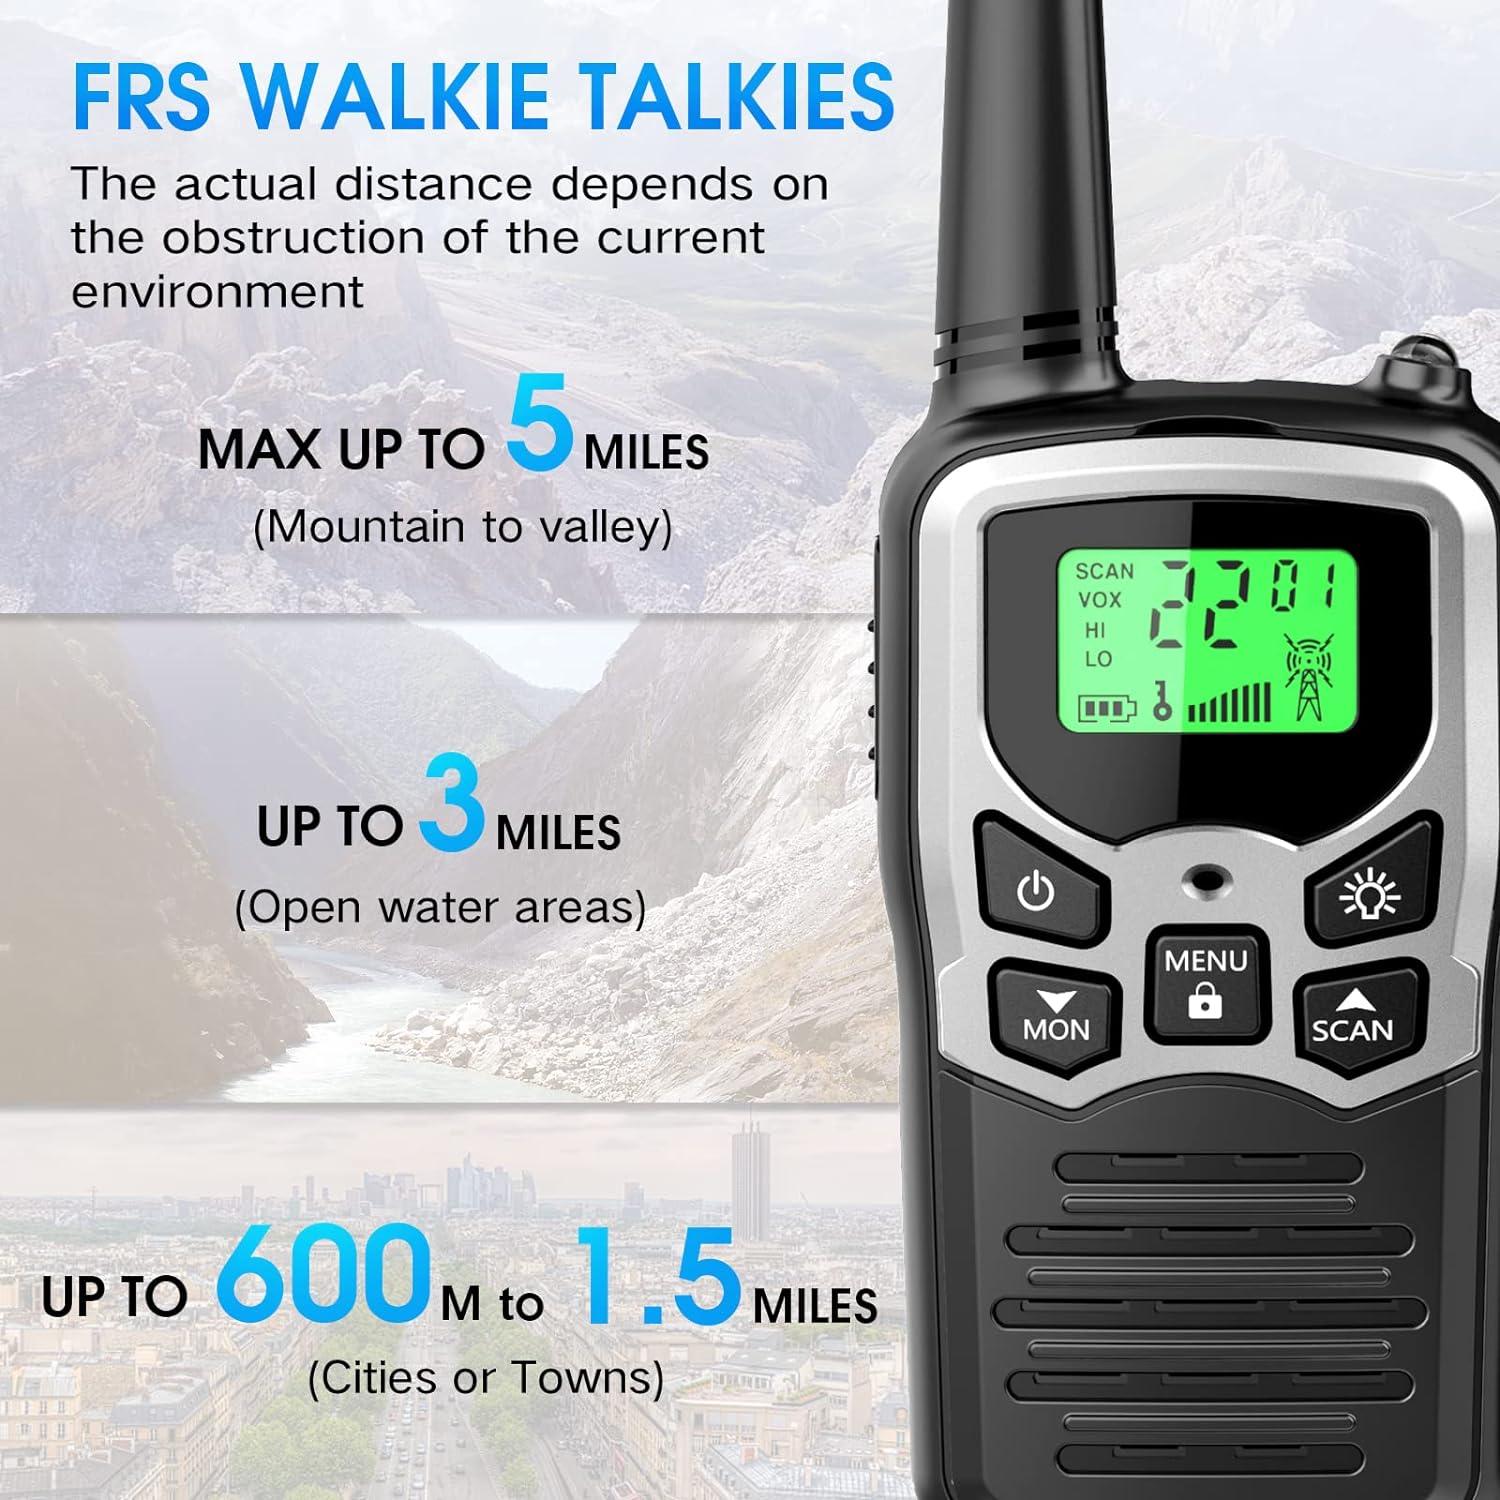 Walkie Talkies RV-7 with 22 FRS Channels, Rivins Walkie Talkies Long Range  for Adults with LED Flashlight VOX Scan LCD Display, Handheld Walkie Talkie